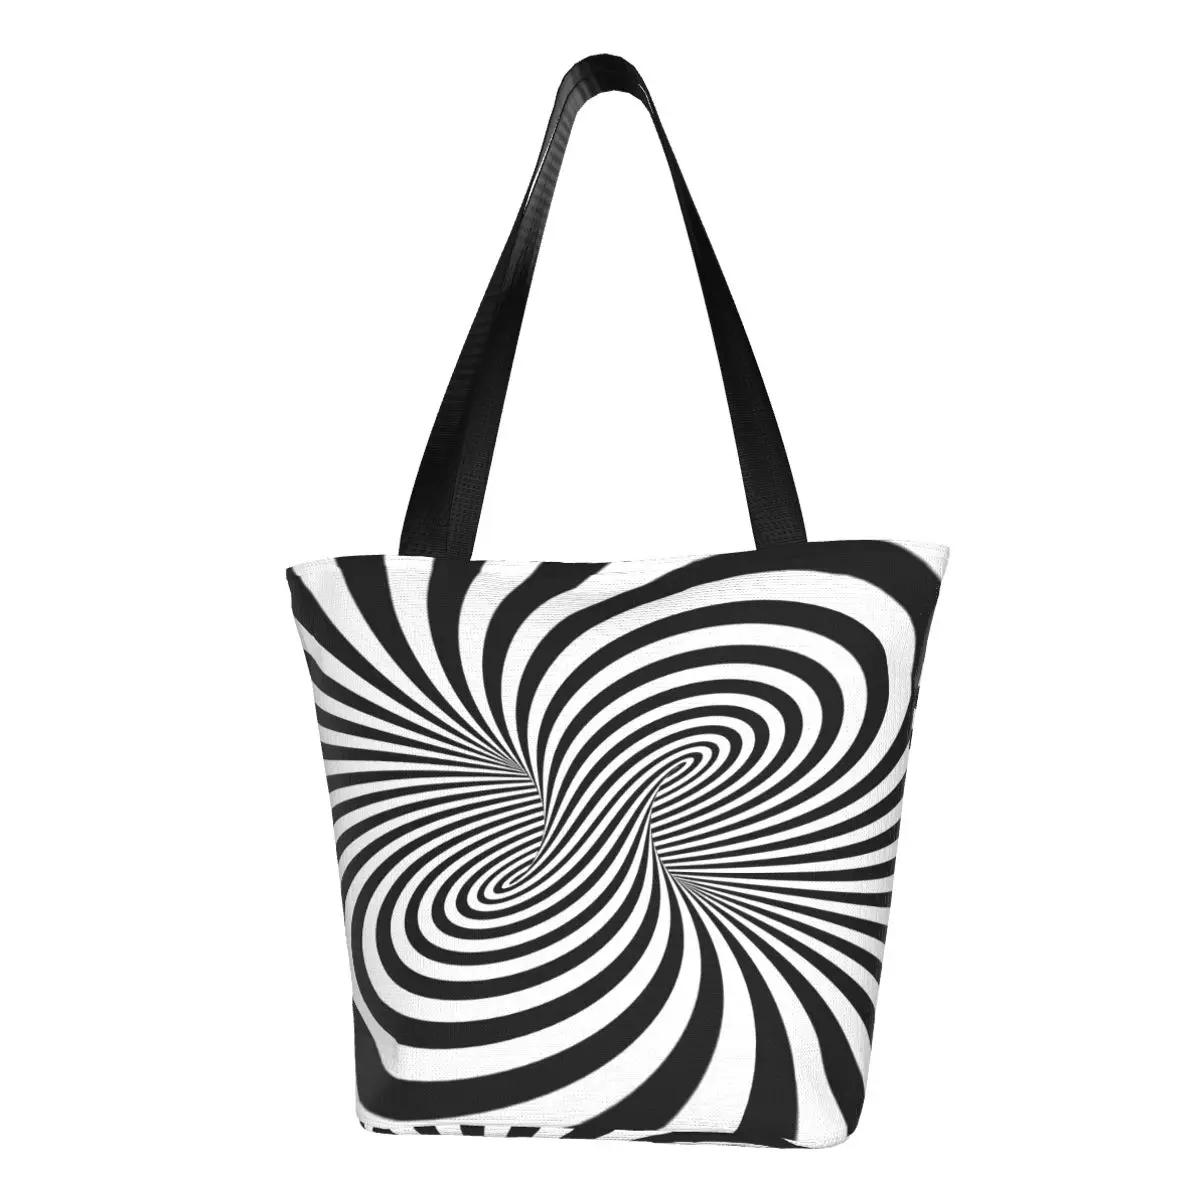 3D Stereo Vision Shopping Bag Aesthetic Cloth Outdoor Handbag Female Fashion Bags